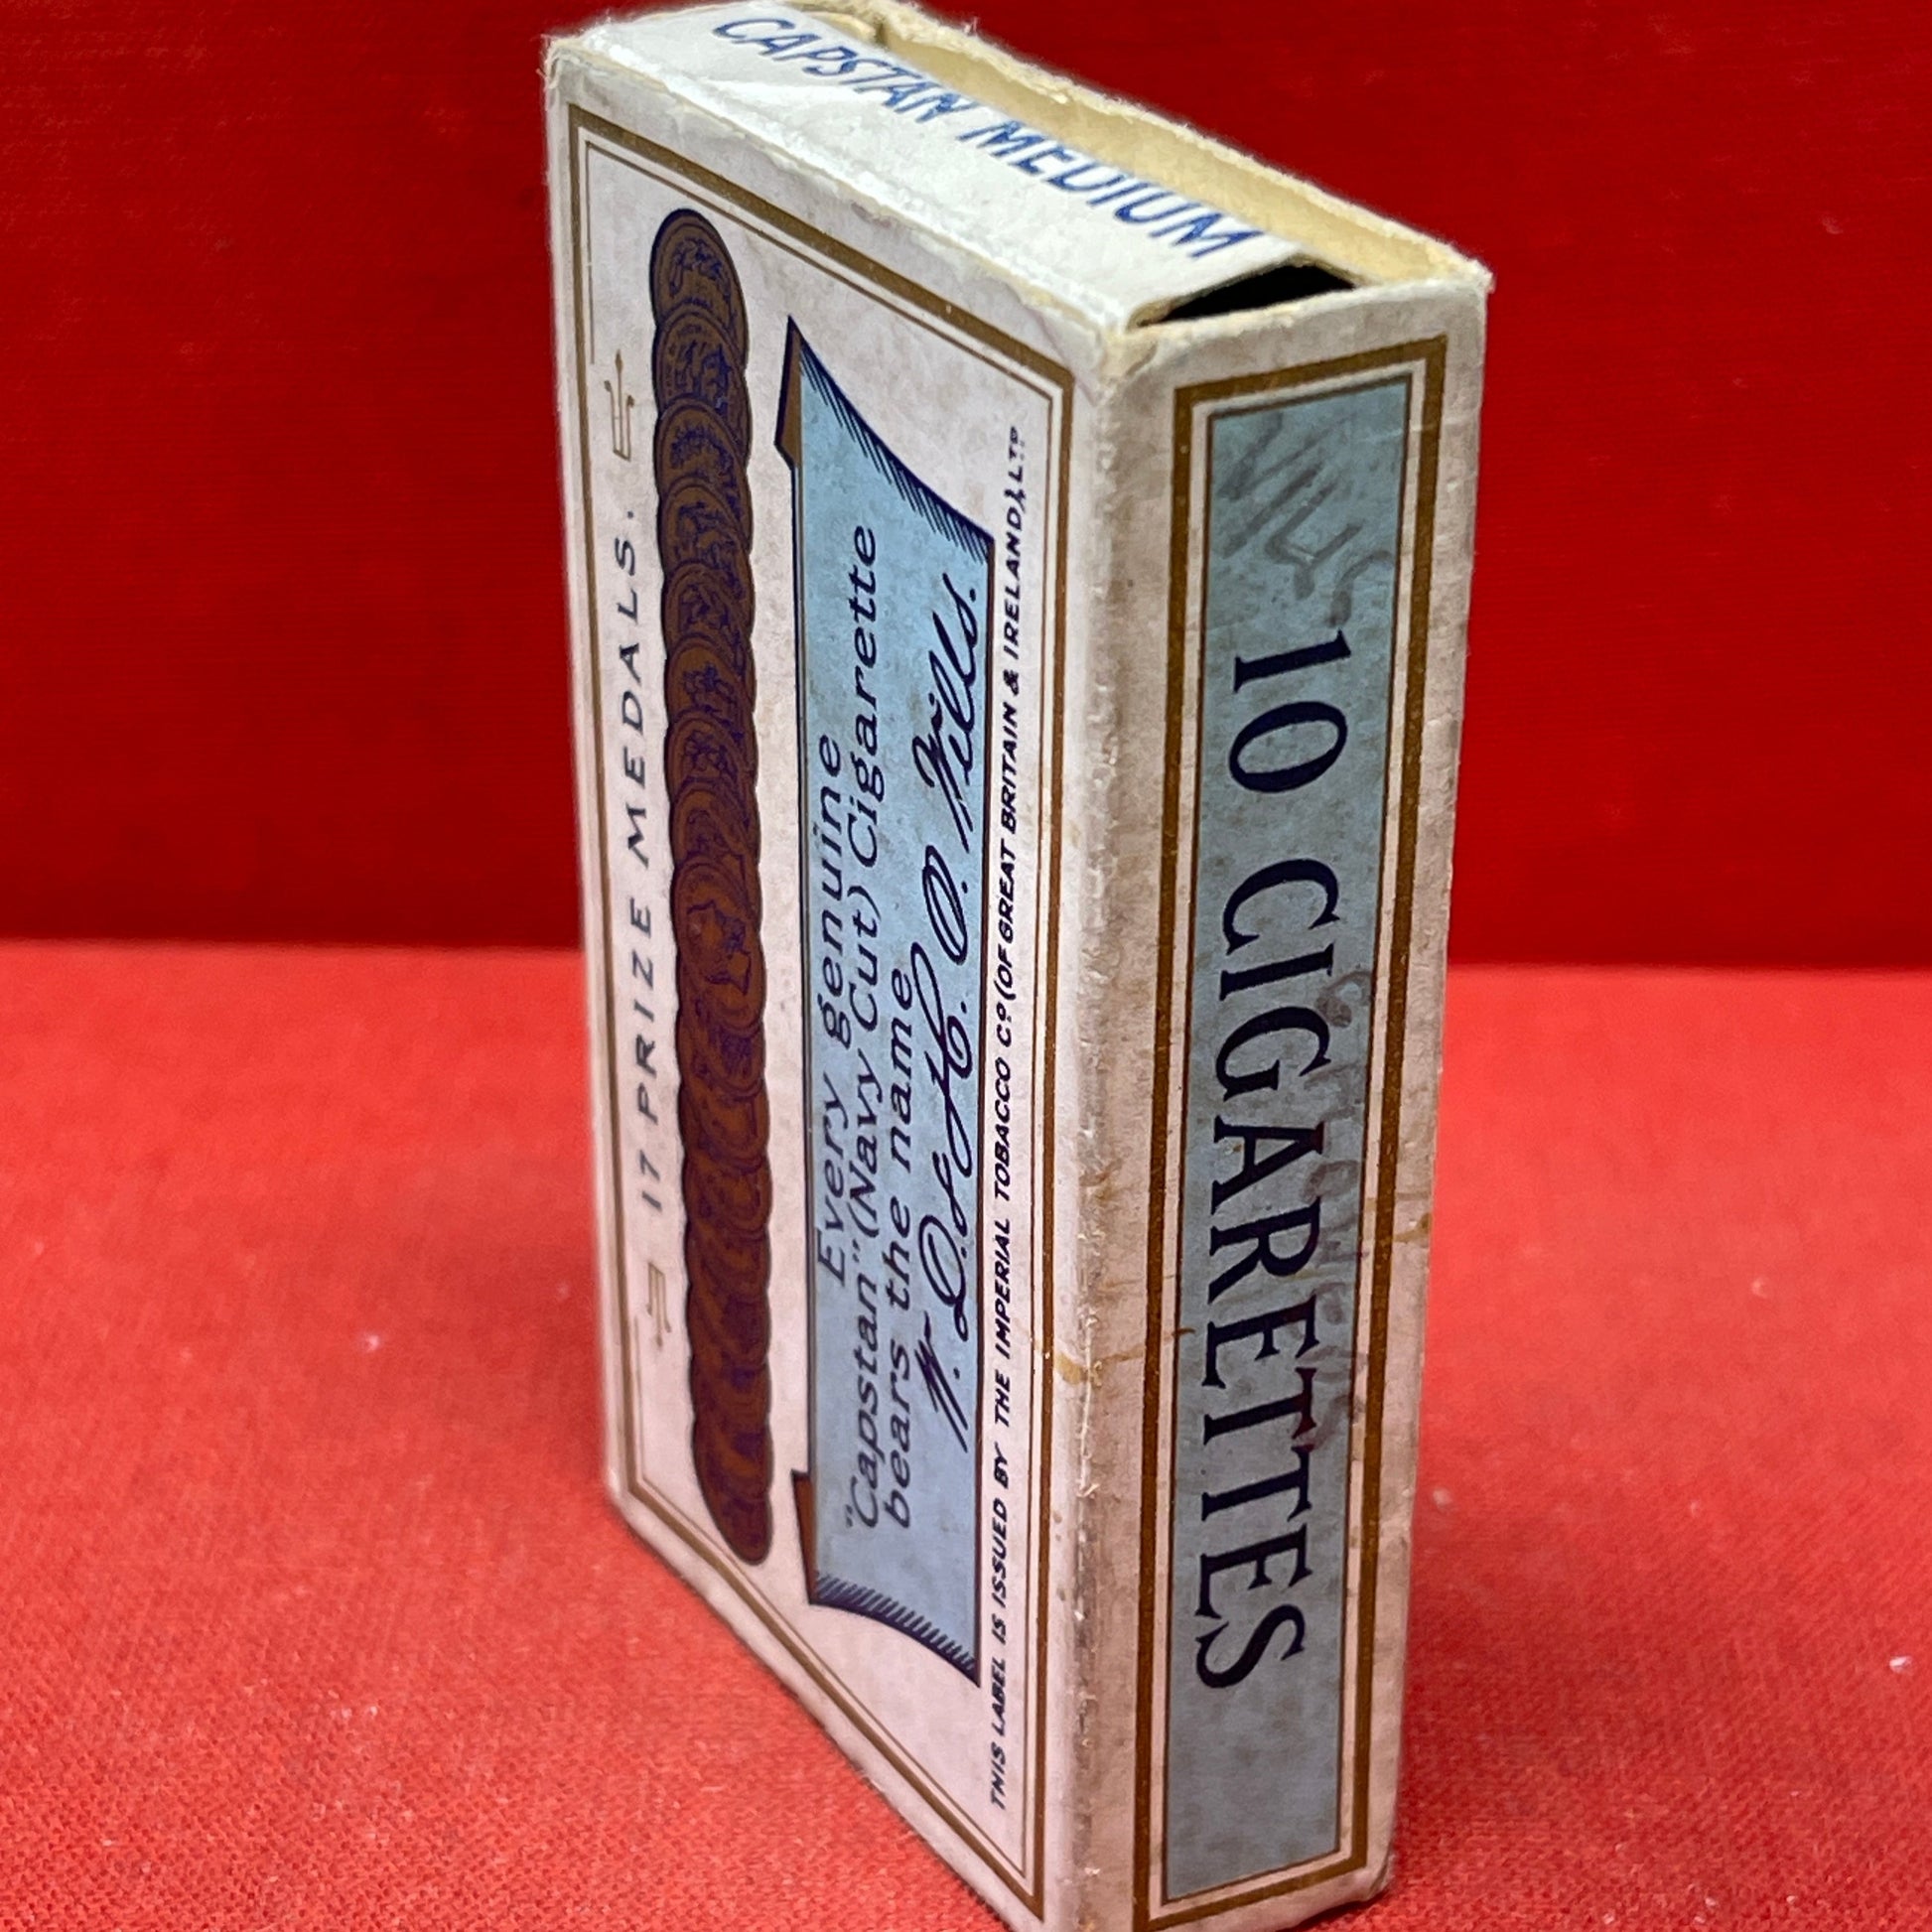 Capstan Navy Cut Cigarettes 10 pack